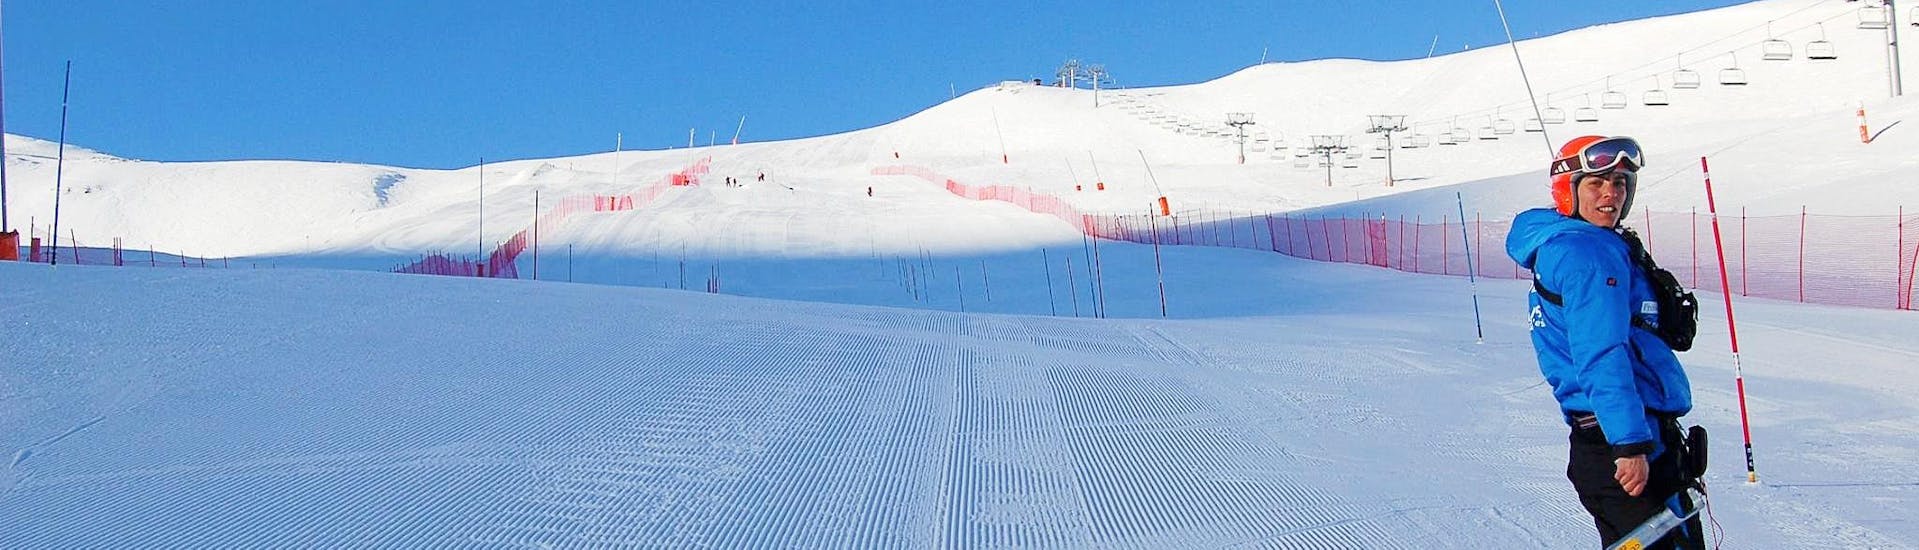 adult-ski-lessons-for-all-levels-escola-vall-de-boi-hero